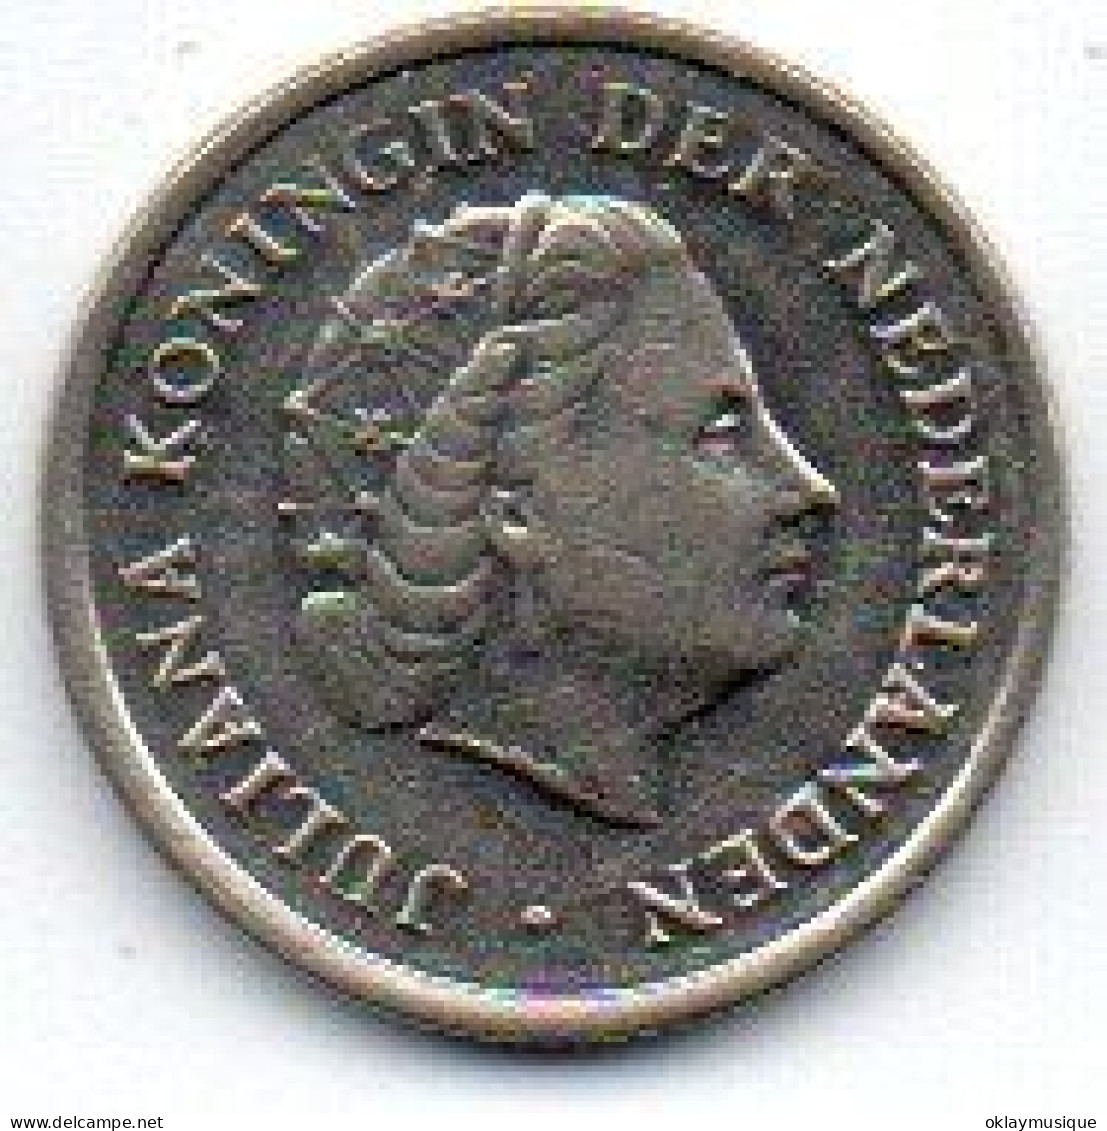 10 Cents 1978 - 10 Centavos